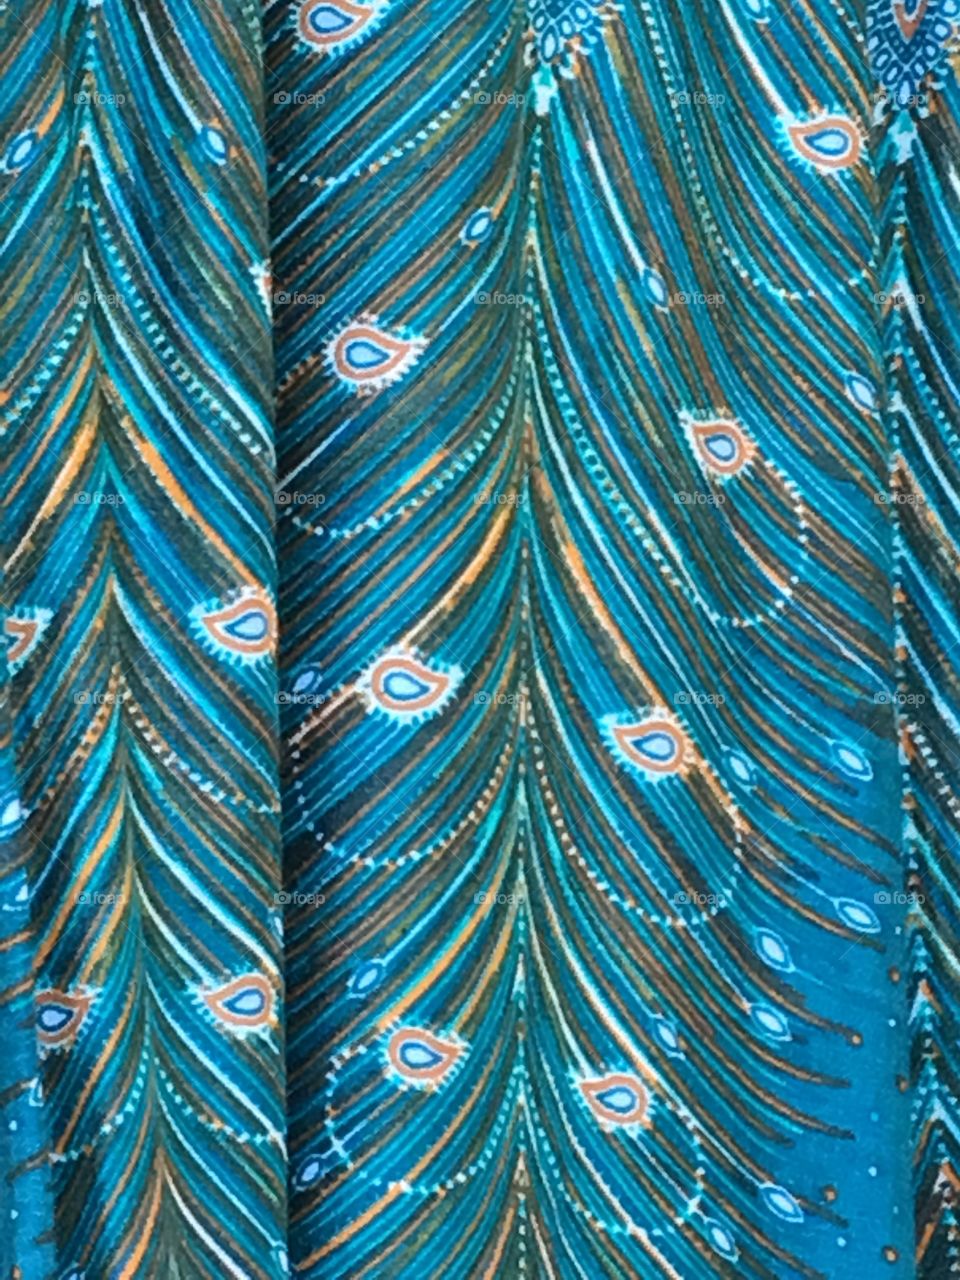 Peacock pattern fabric 